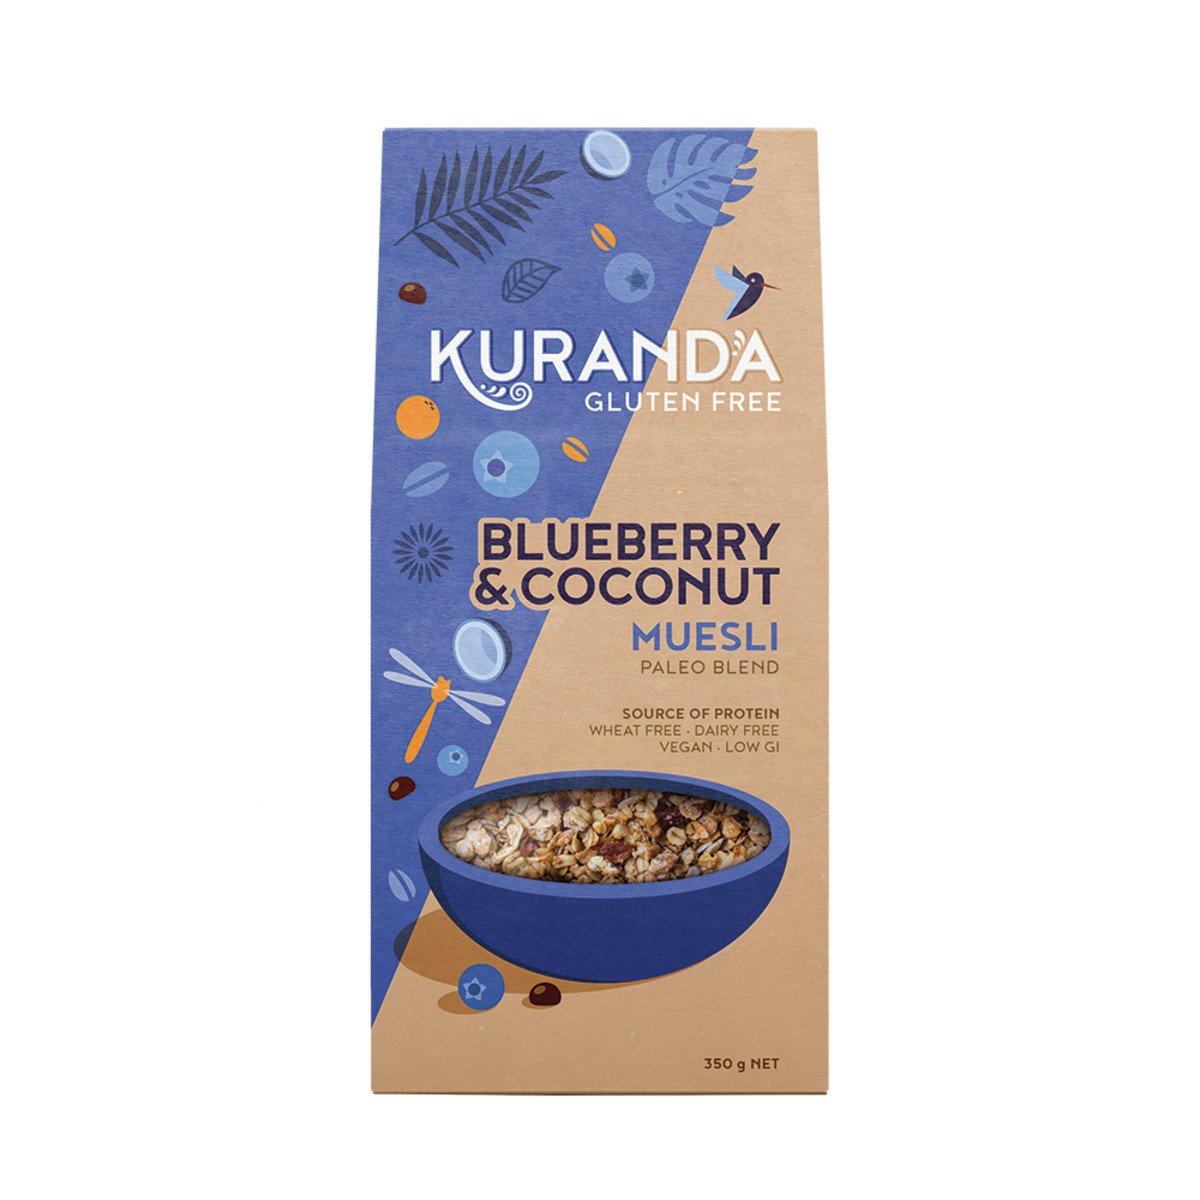 KURANDA - Gluten Free Muesli Blueberry & Coconut (Paleo Blend)